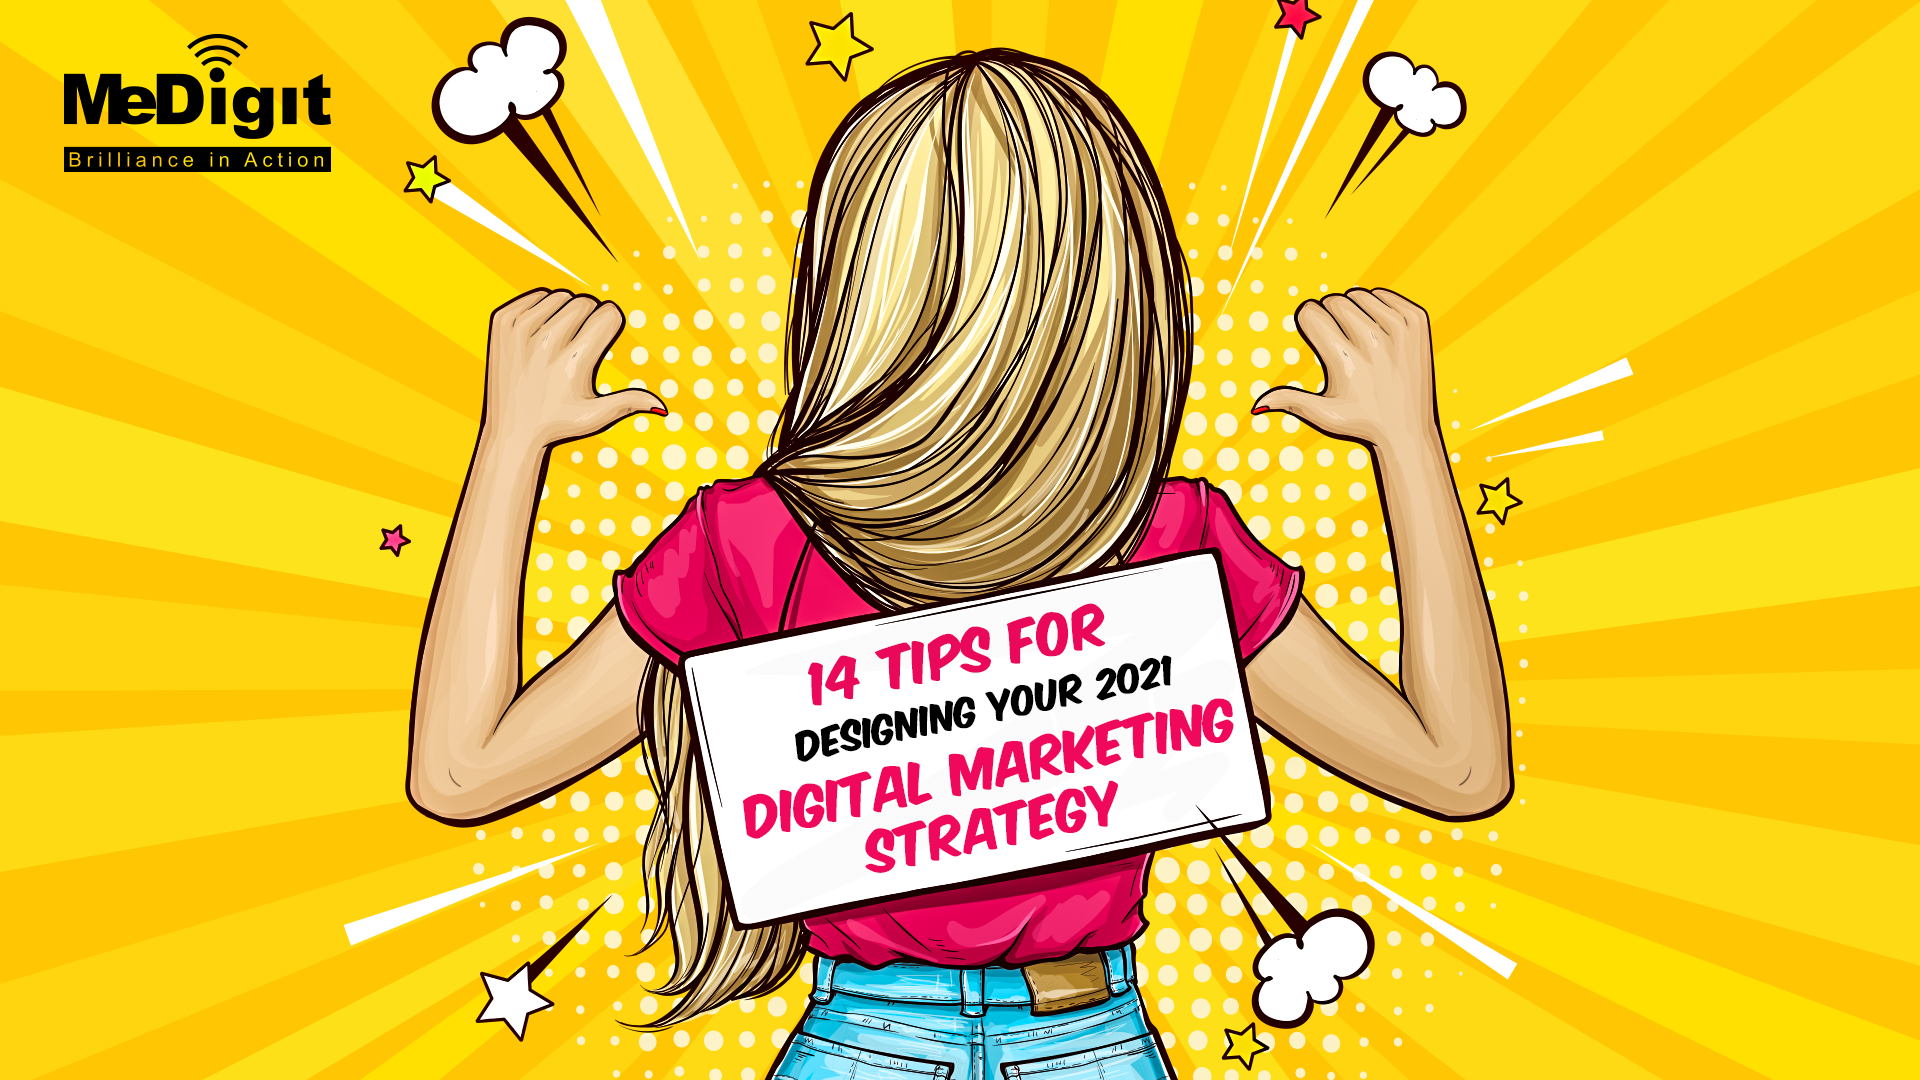 Digital Marketing Tips for 2021